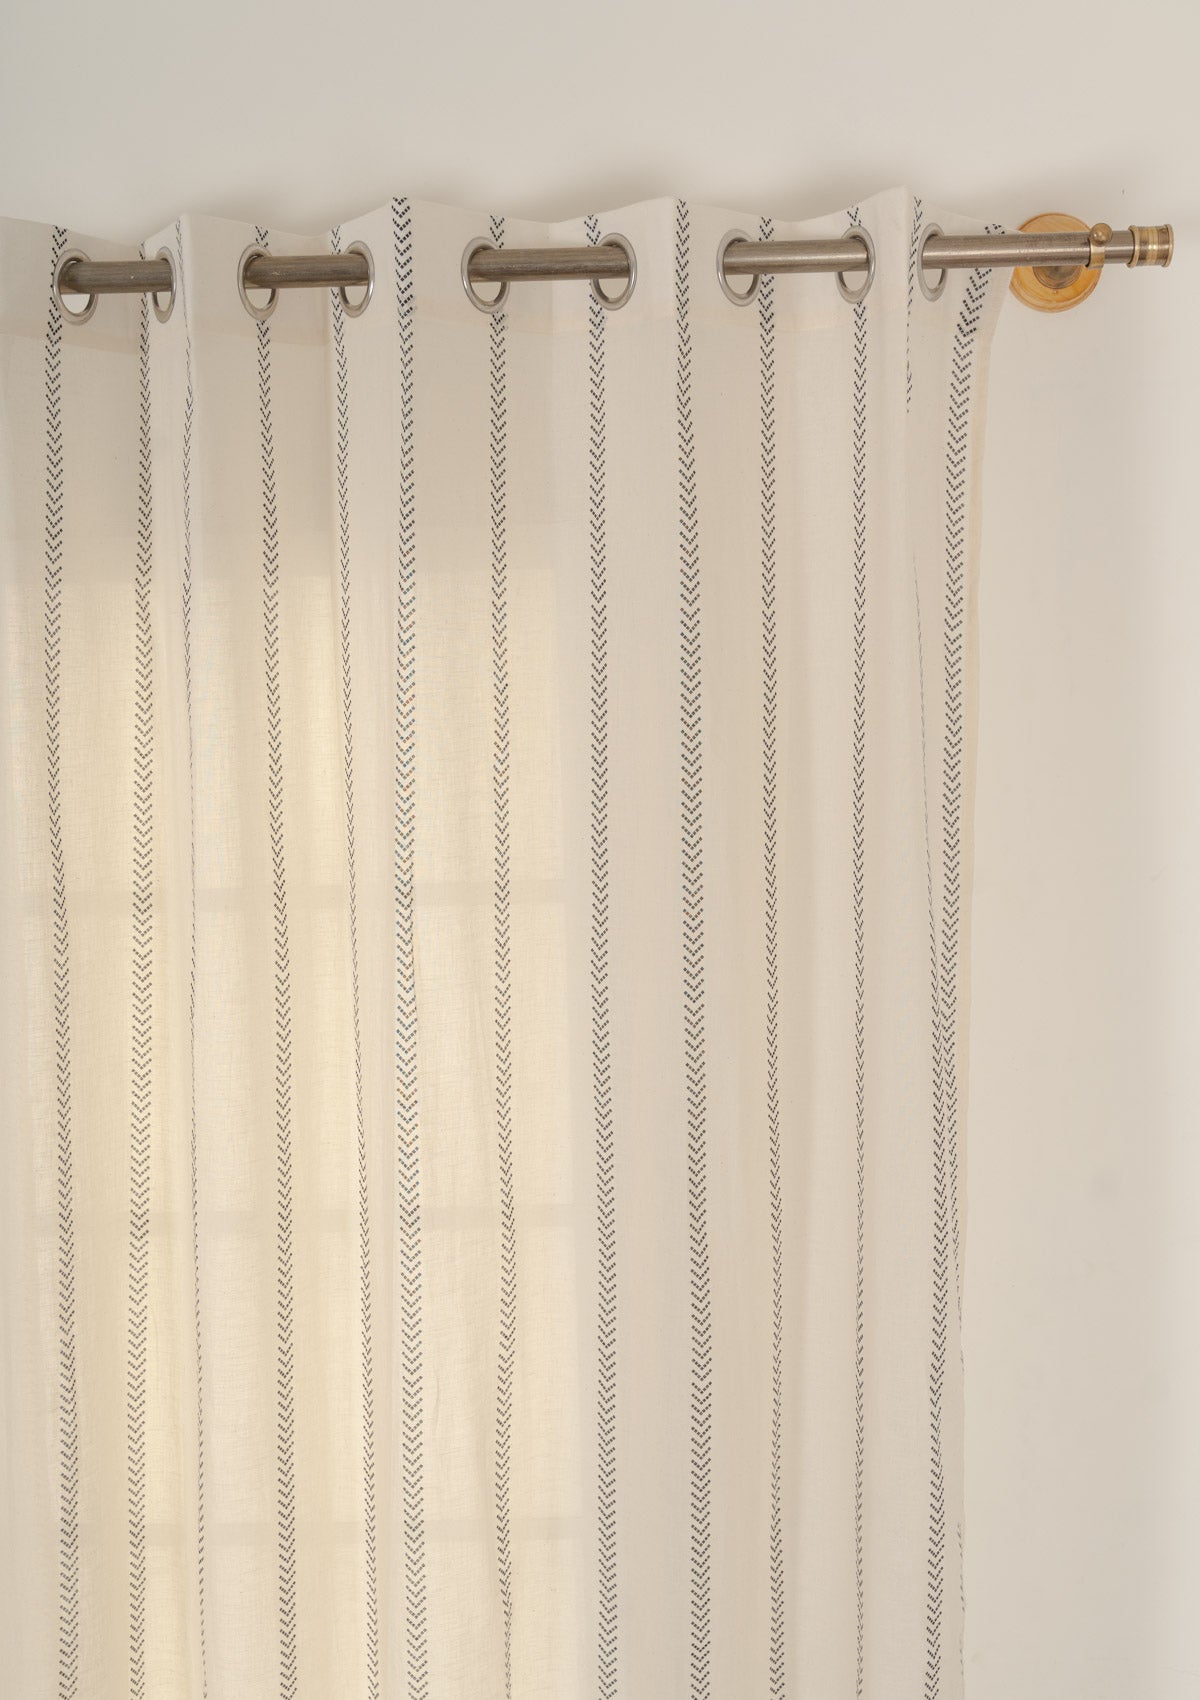 Spear 100% cotton geometric sheer curtain for living room - Light filtering - Black - Single - Pack of 1